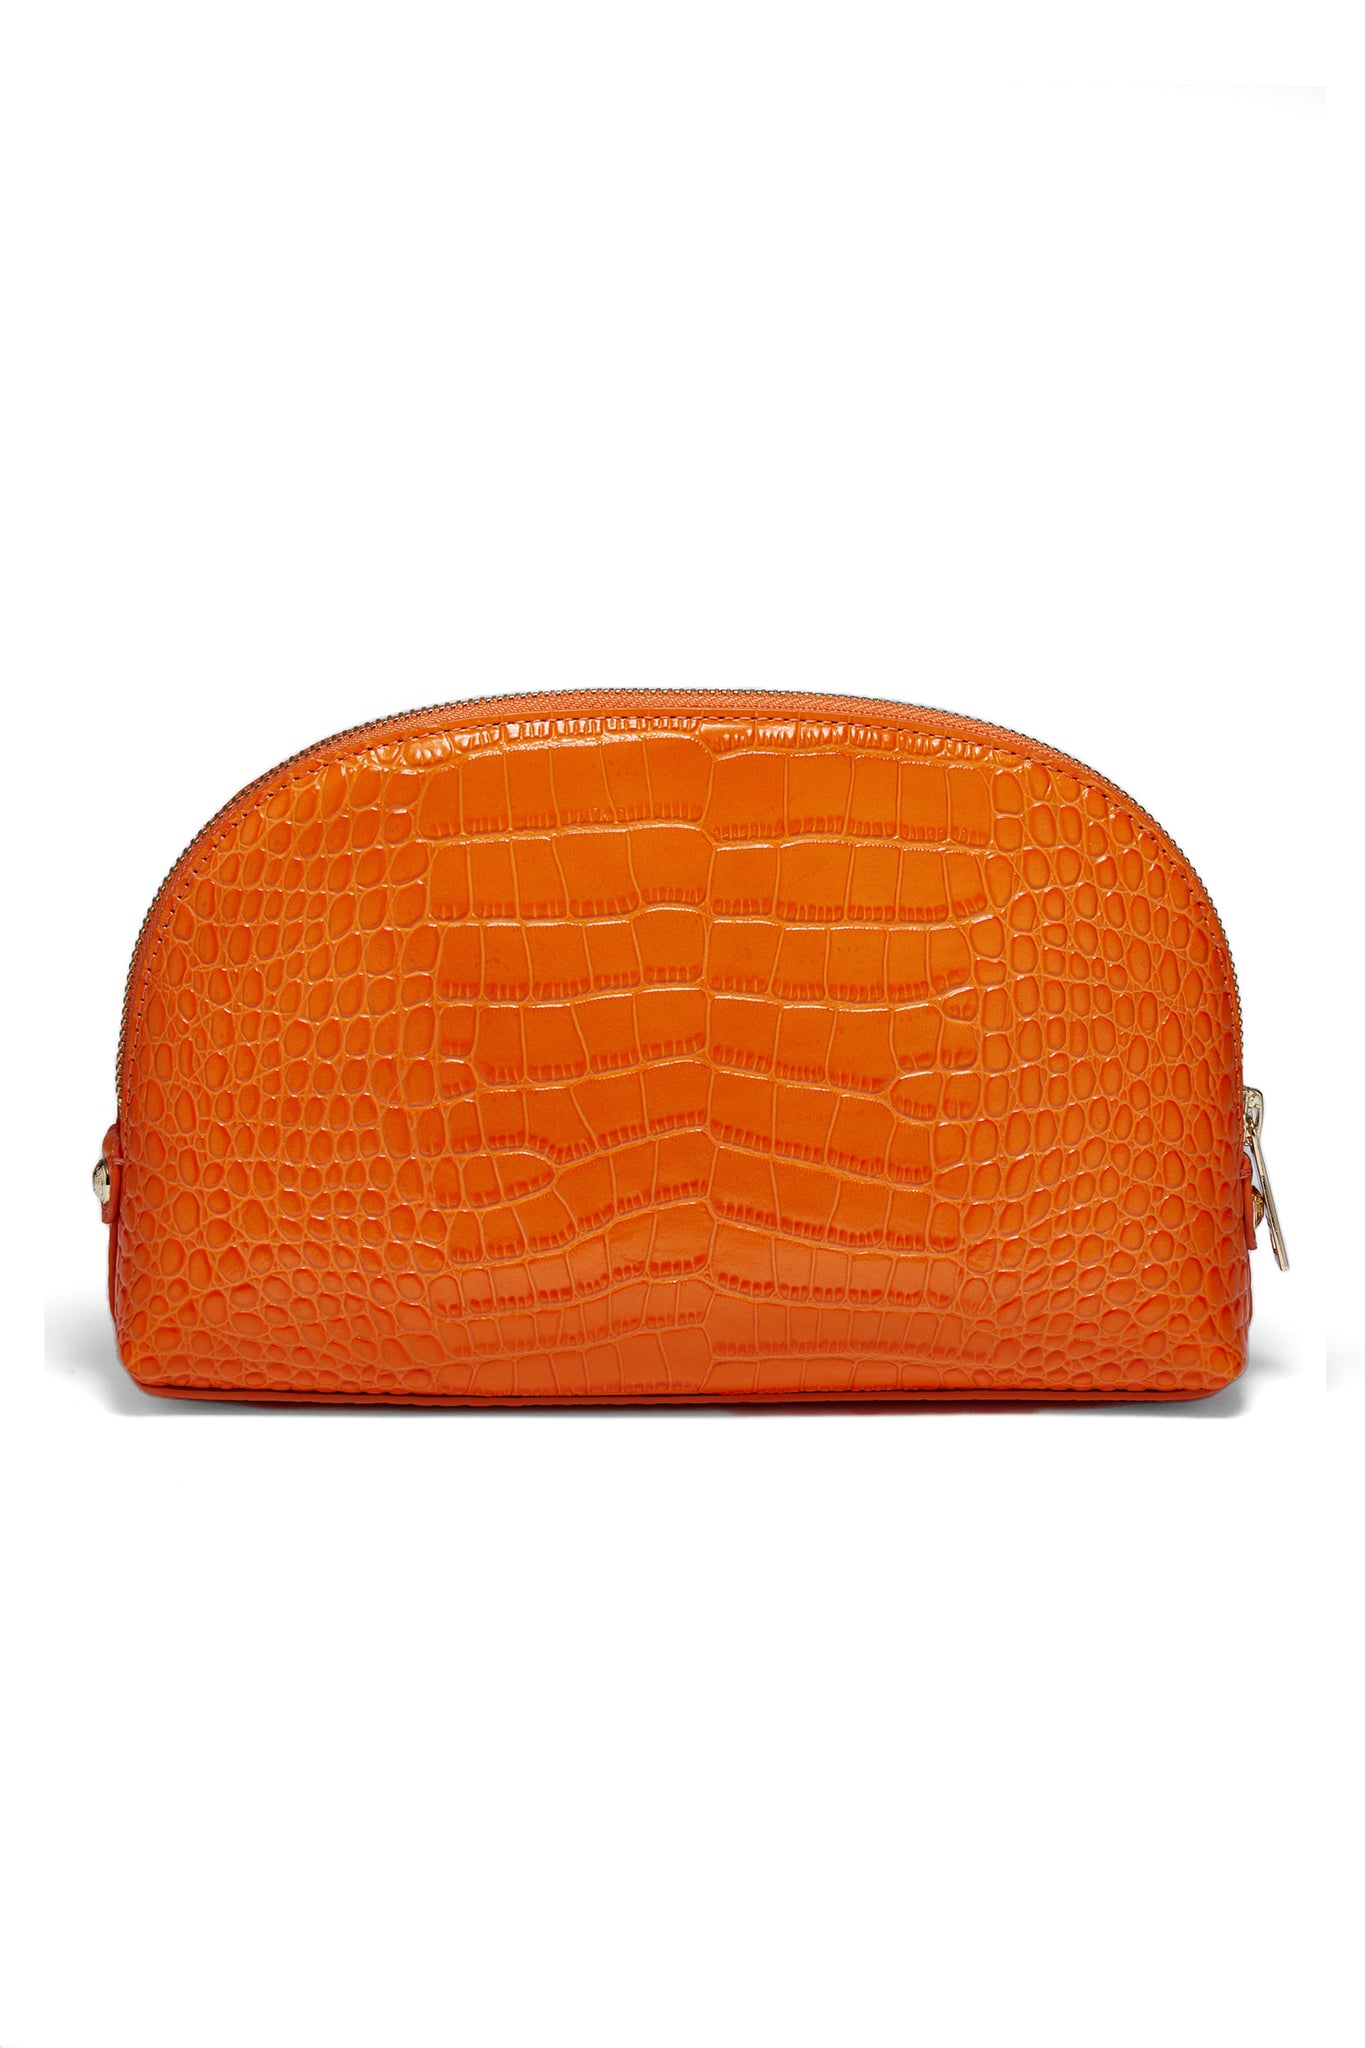 Chelsea Makeup Bag (Orange Croc)